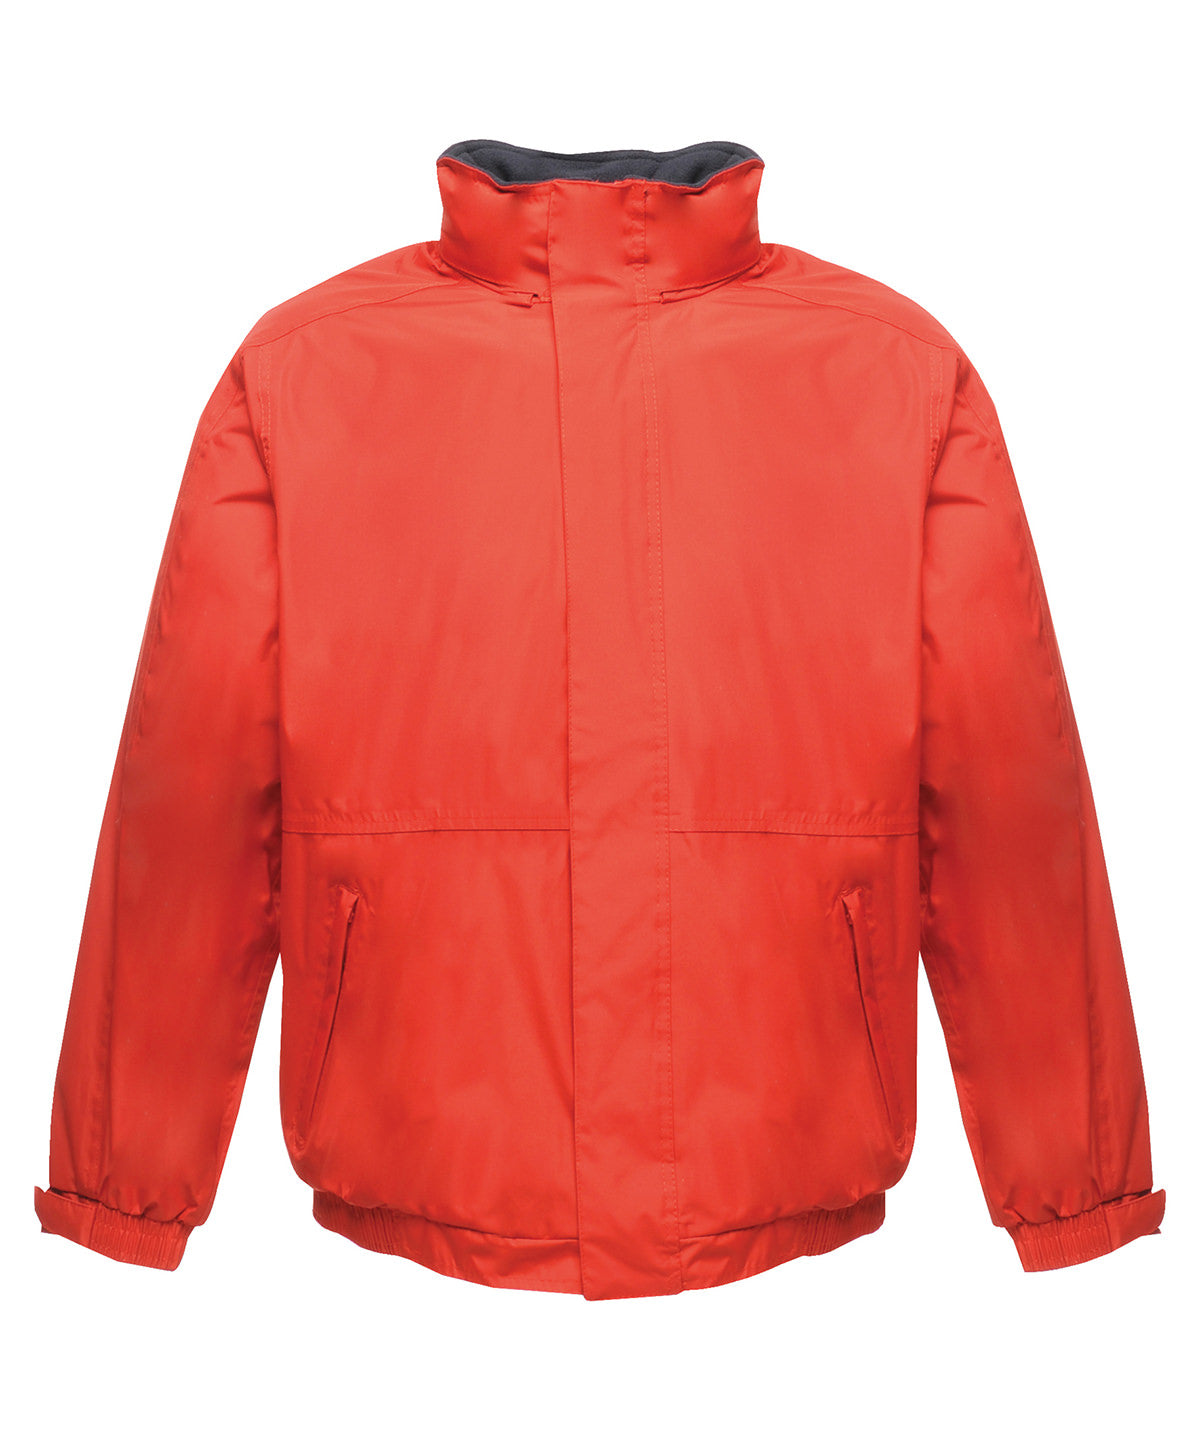 Regatta Dover jacket Classic Red/Navy